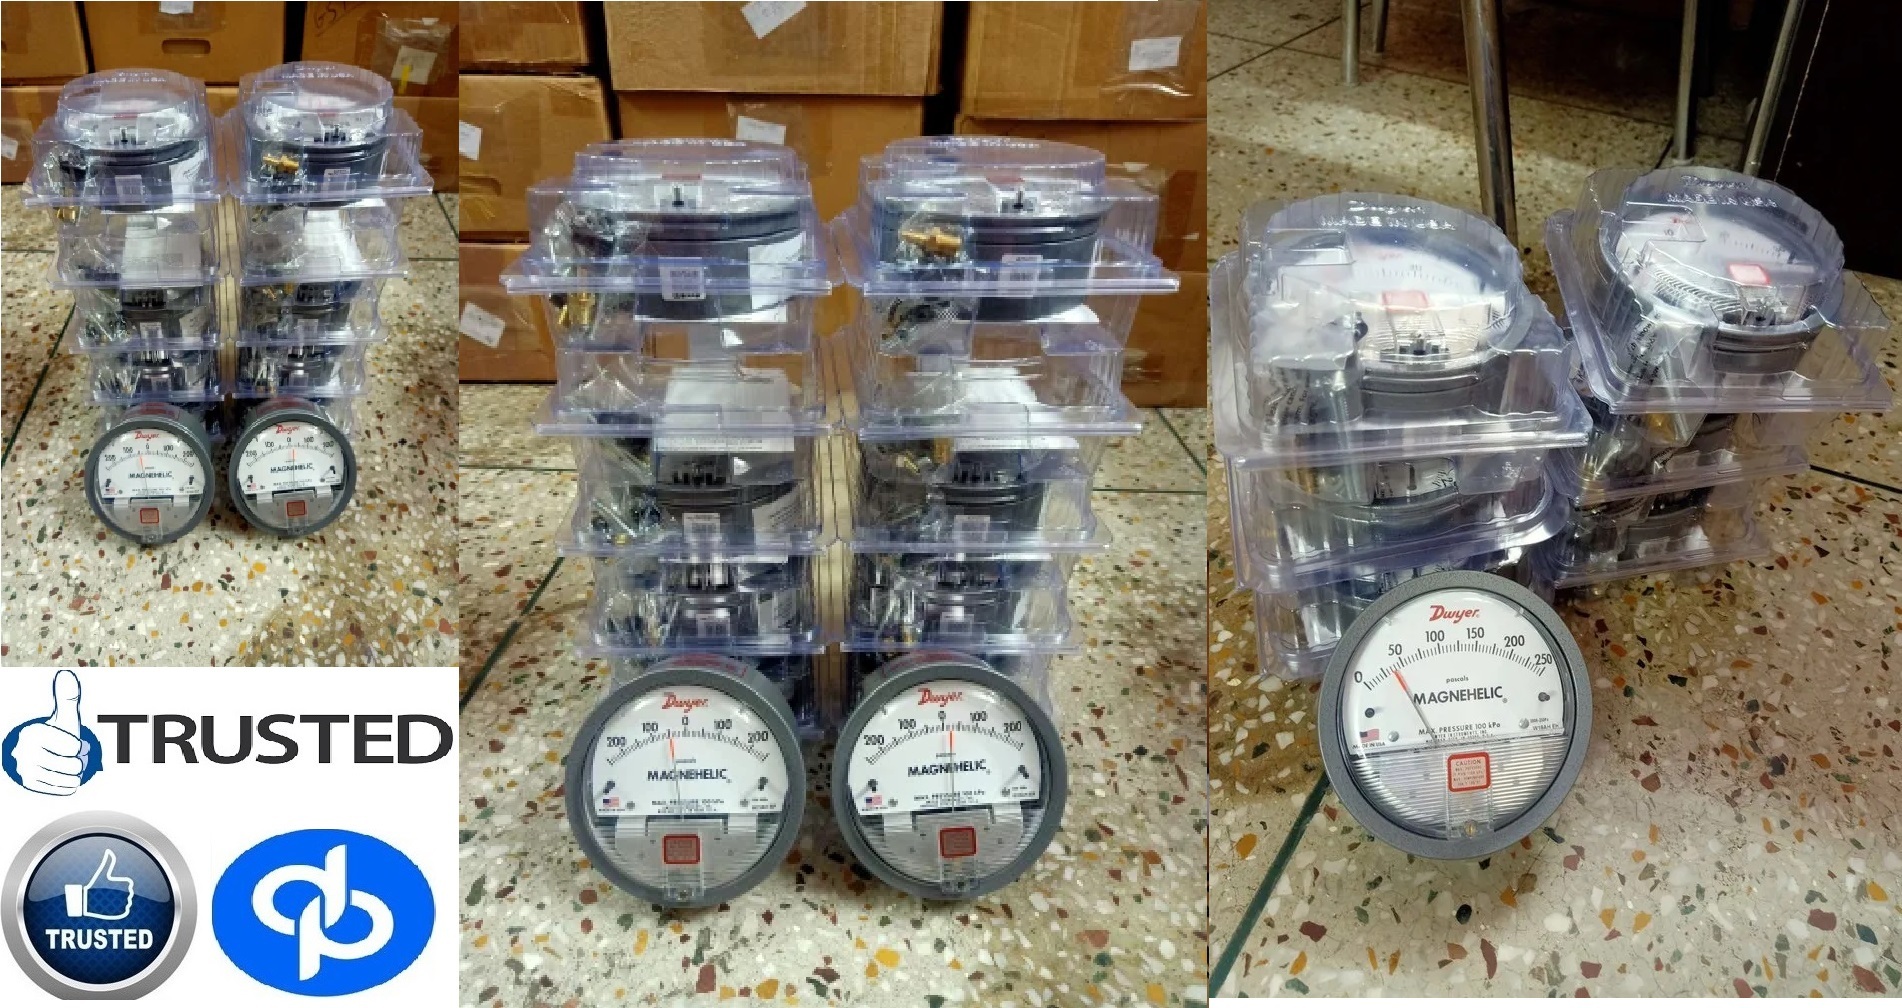 Dwyer Maghnehic gauges by Karnal Haryana